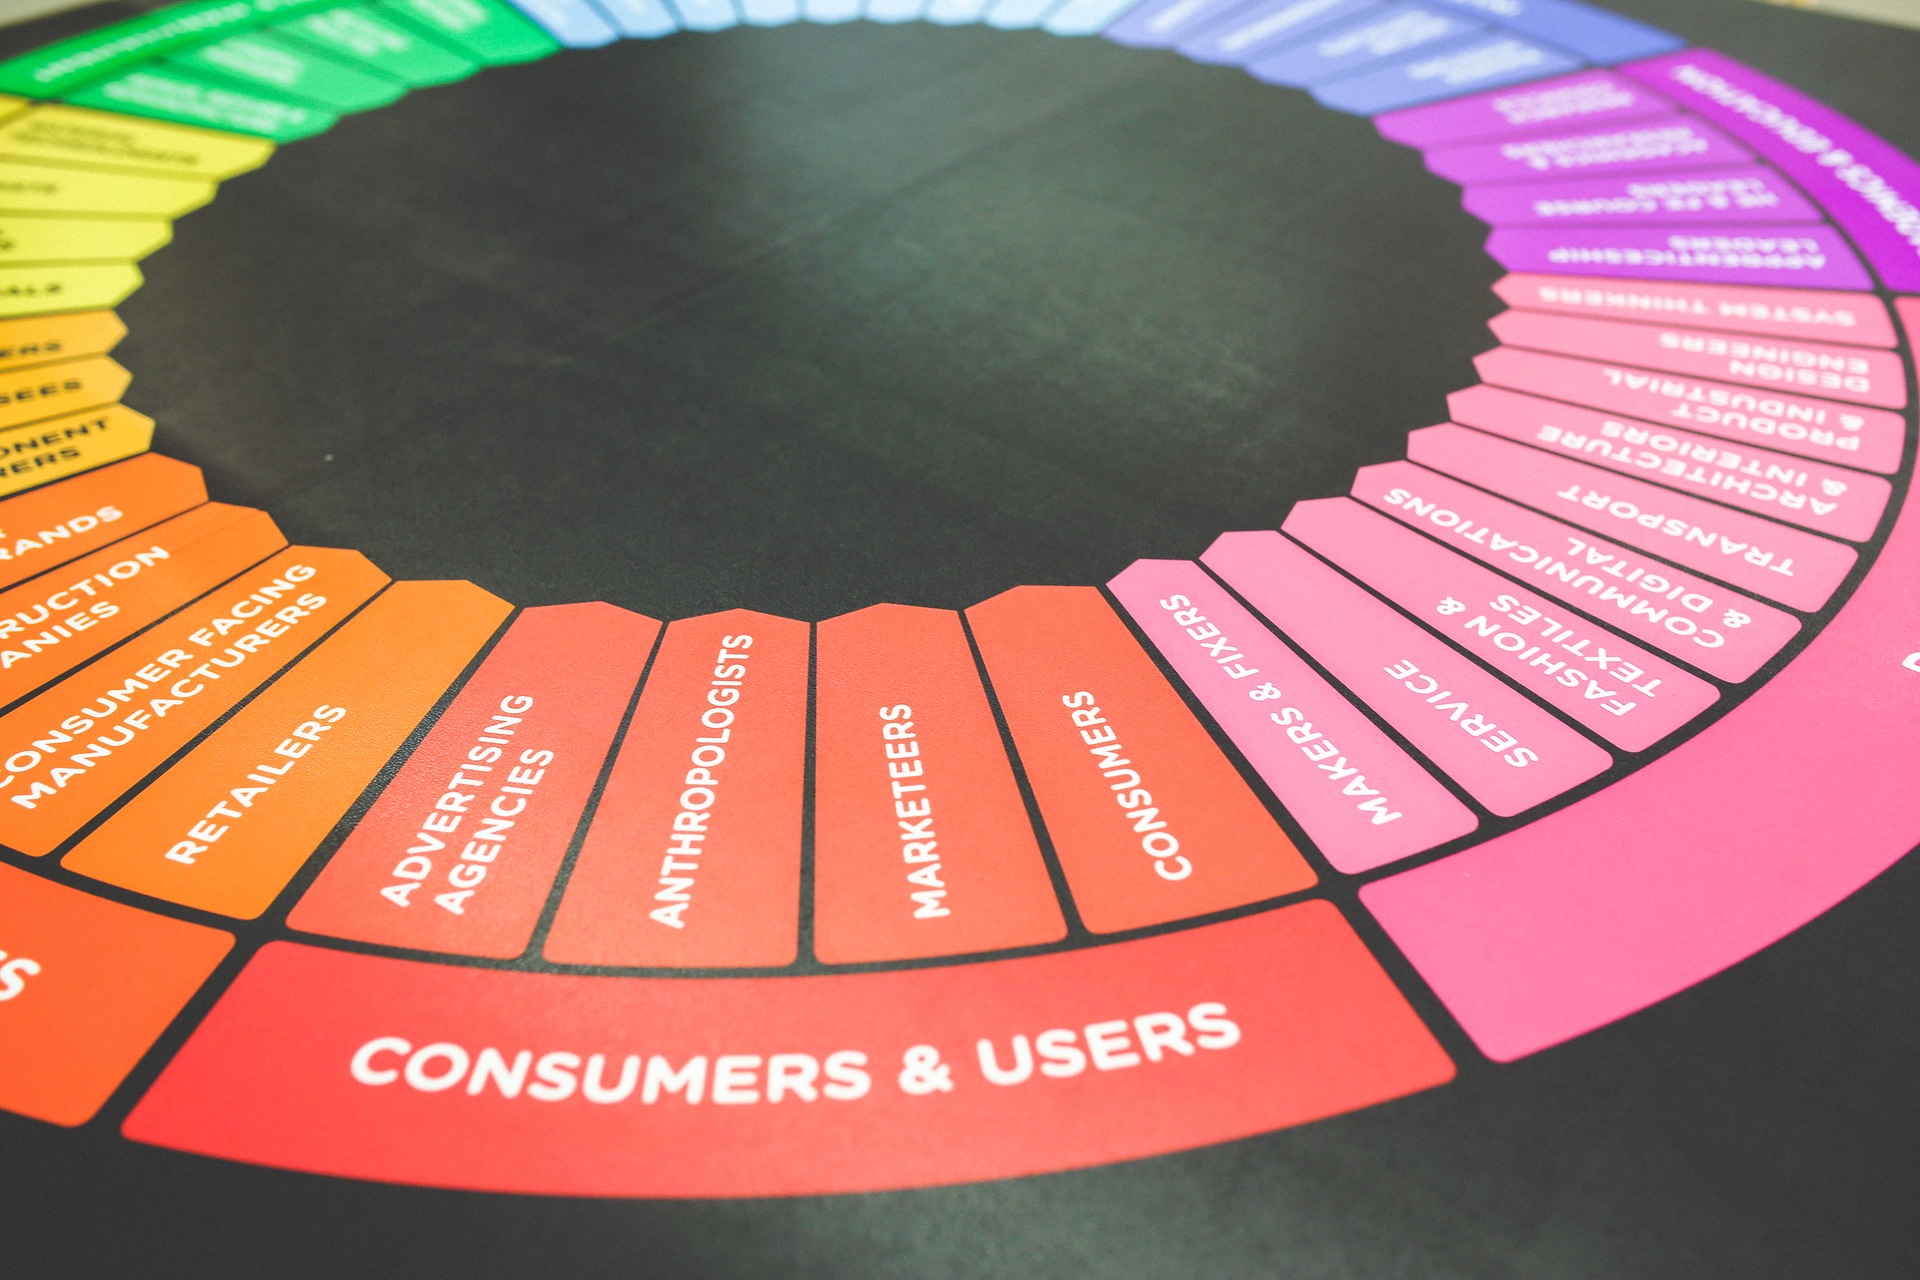 marketing colour wheel customer insights